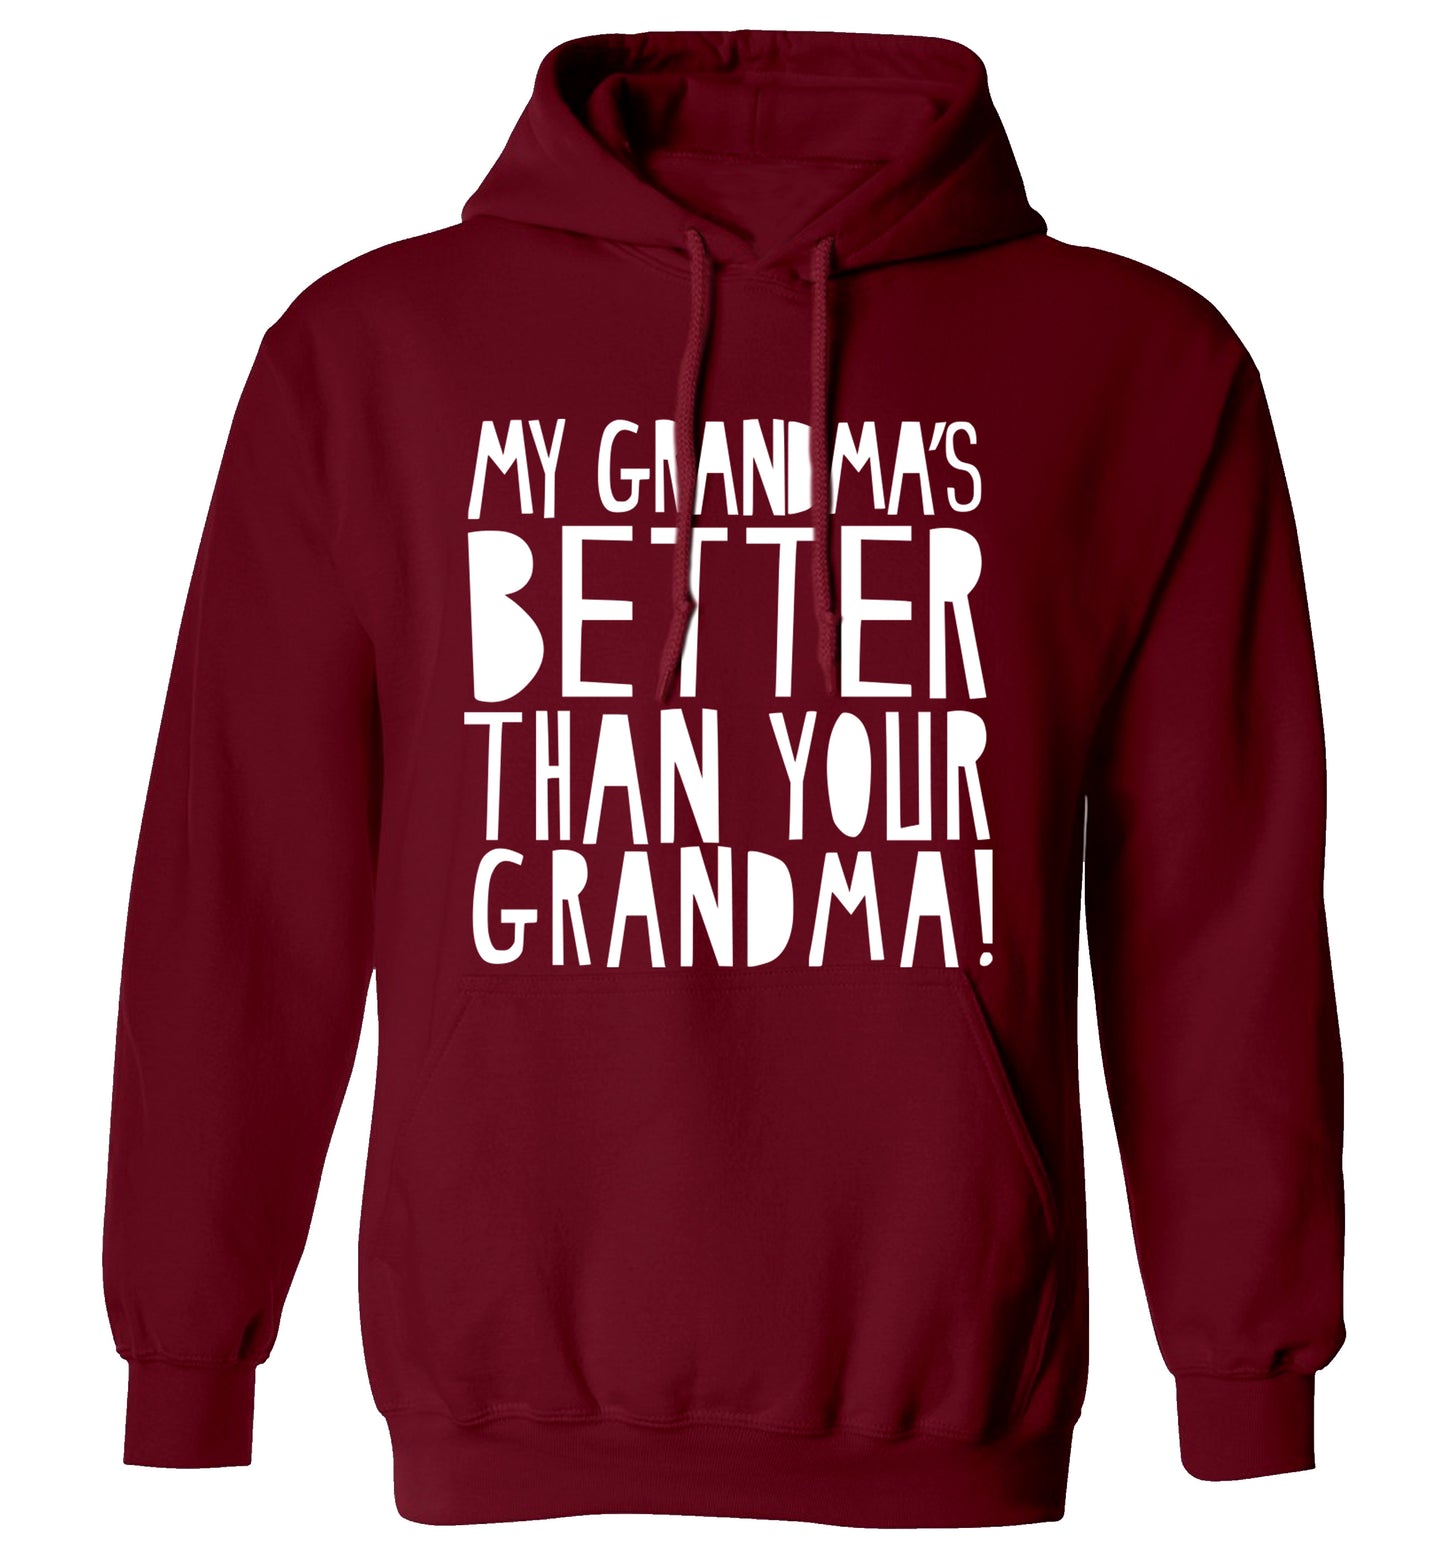 My grandma's better than your grandma adults unisex maroon hoodie 2XL